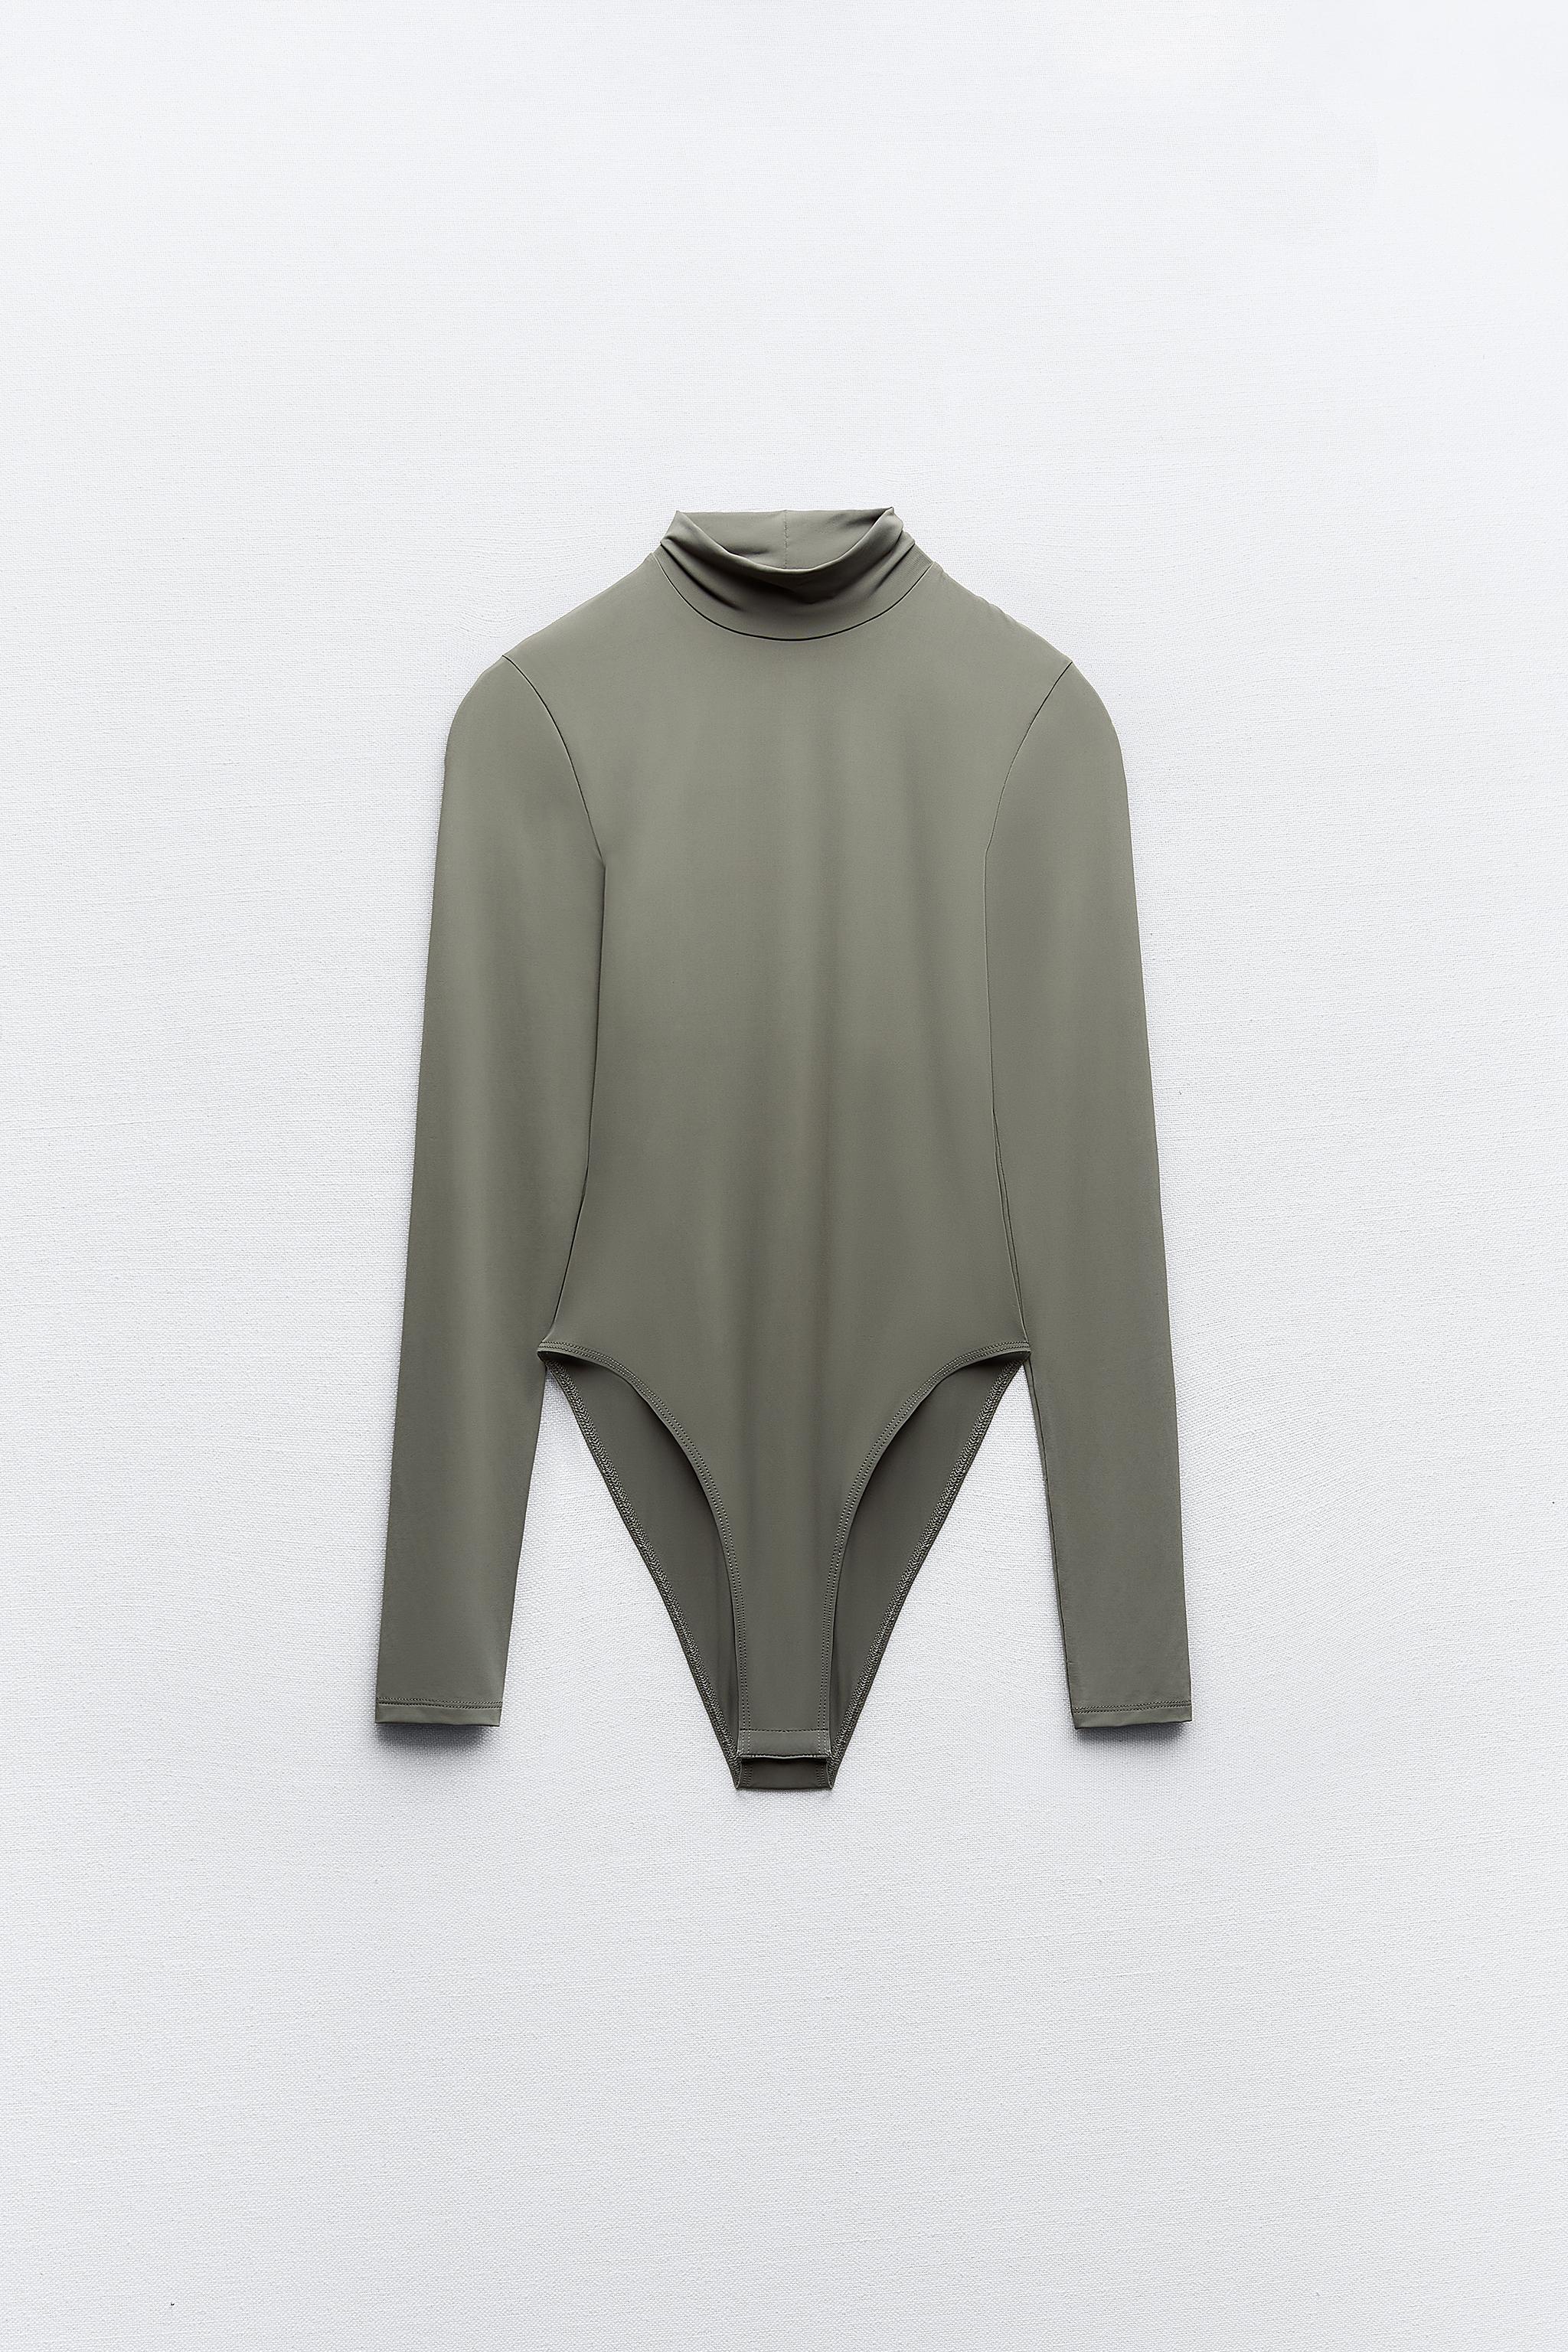 ZARA Bodysuit with Transparent flower design Long Sleeve Black SZL New  Authentic